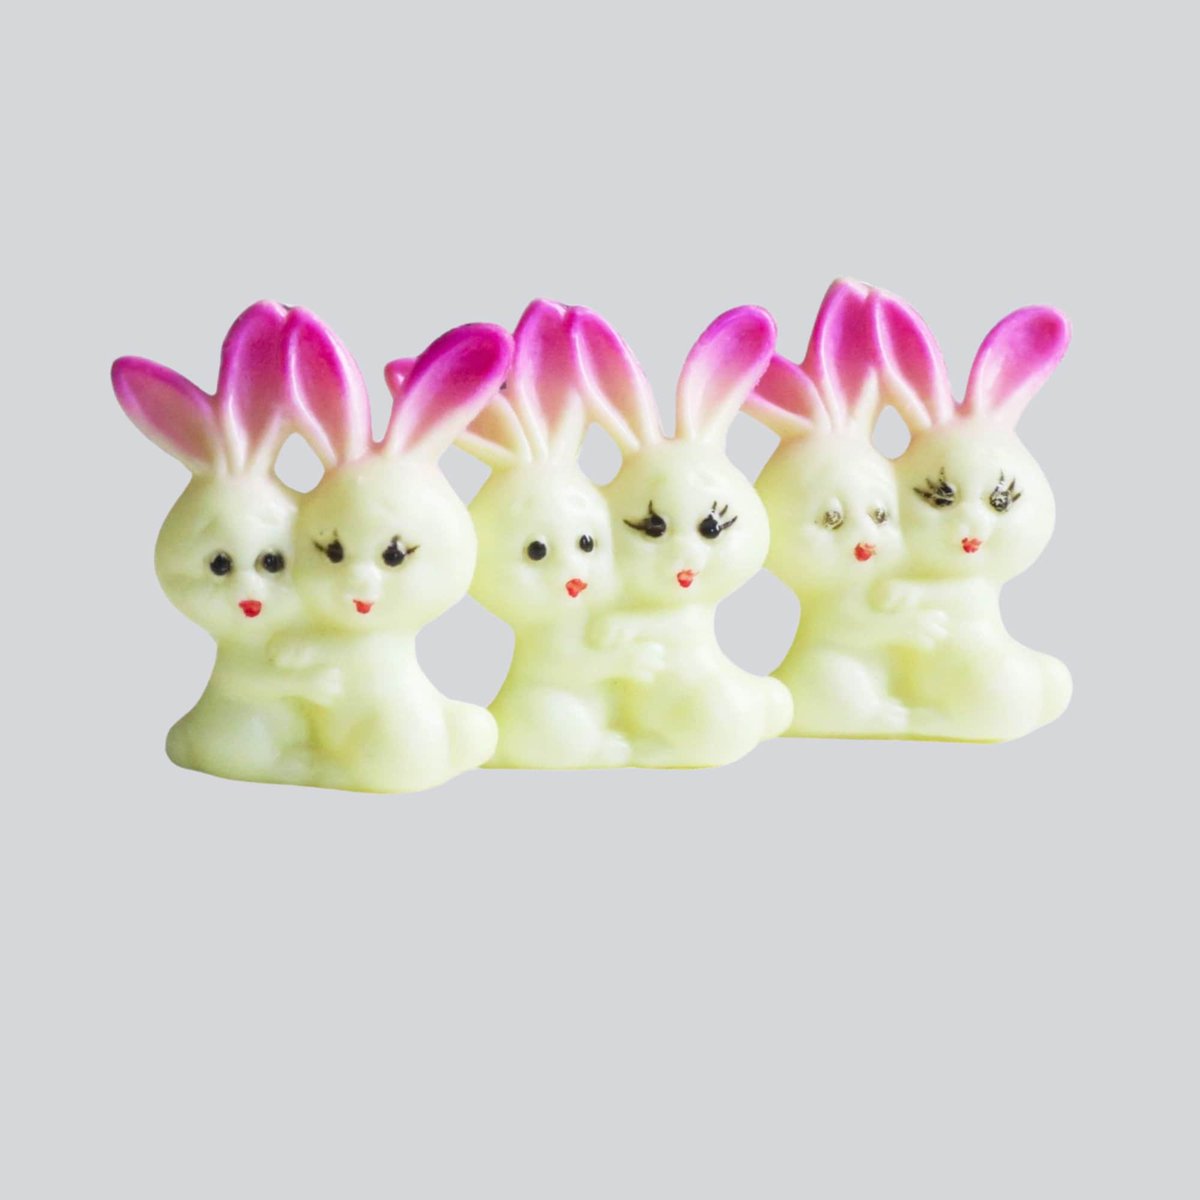 Vintage Miniature Hugging Bunnies, Gift Box Decoration, Spring Easter Wreath or Basket Supplies tuppu.net/c1b7c228 #Vintage4Sale #EtsyteamUnity #MomDay2024 #SMILEtt23